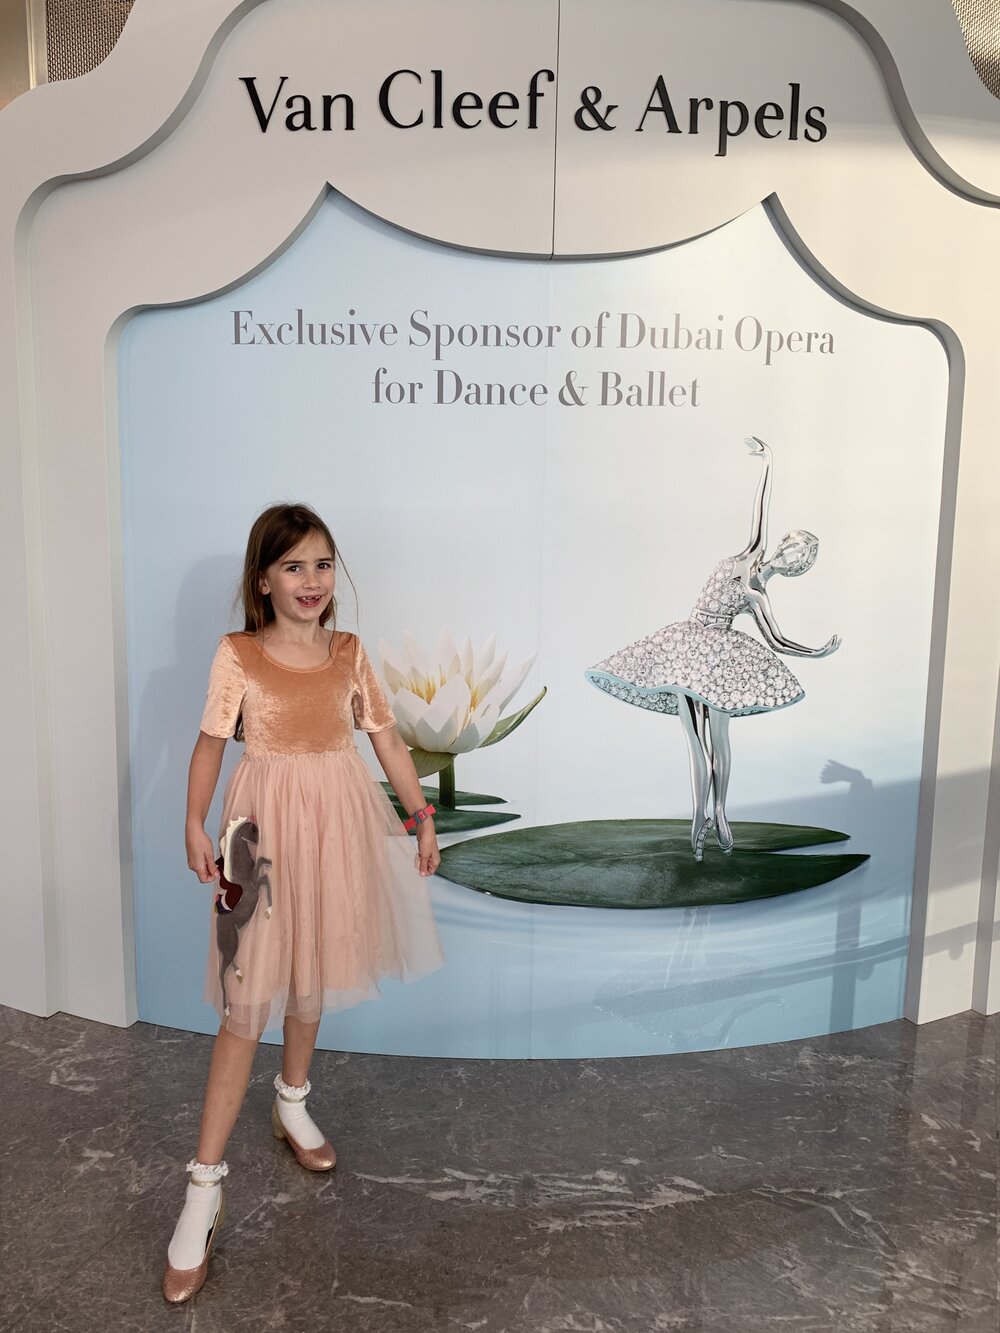 Leo at the Nutcracker at Dubai Opera